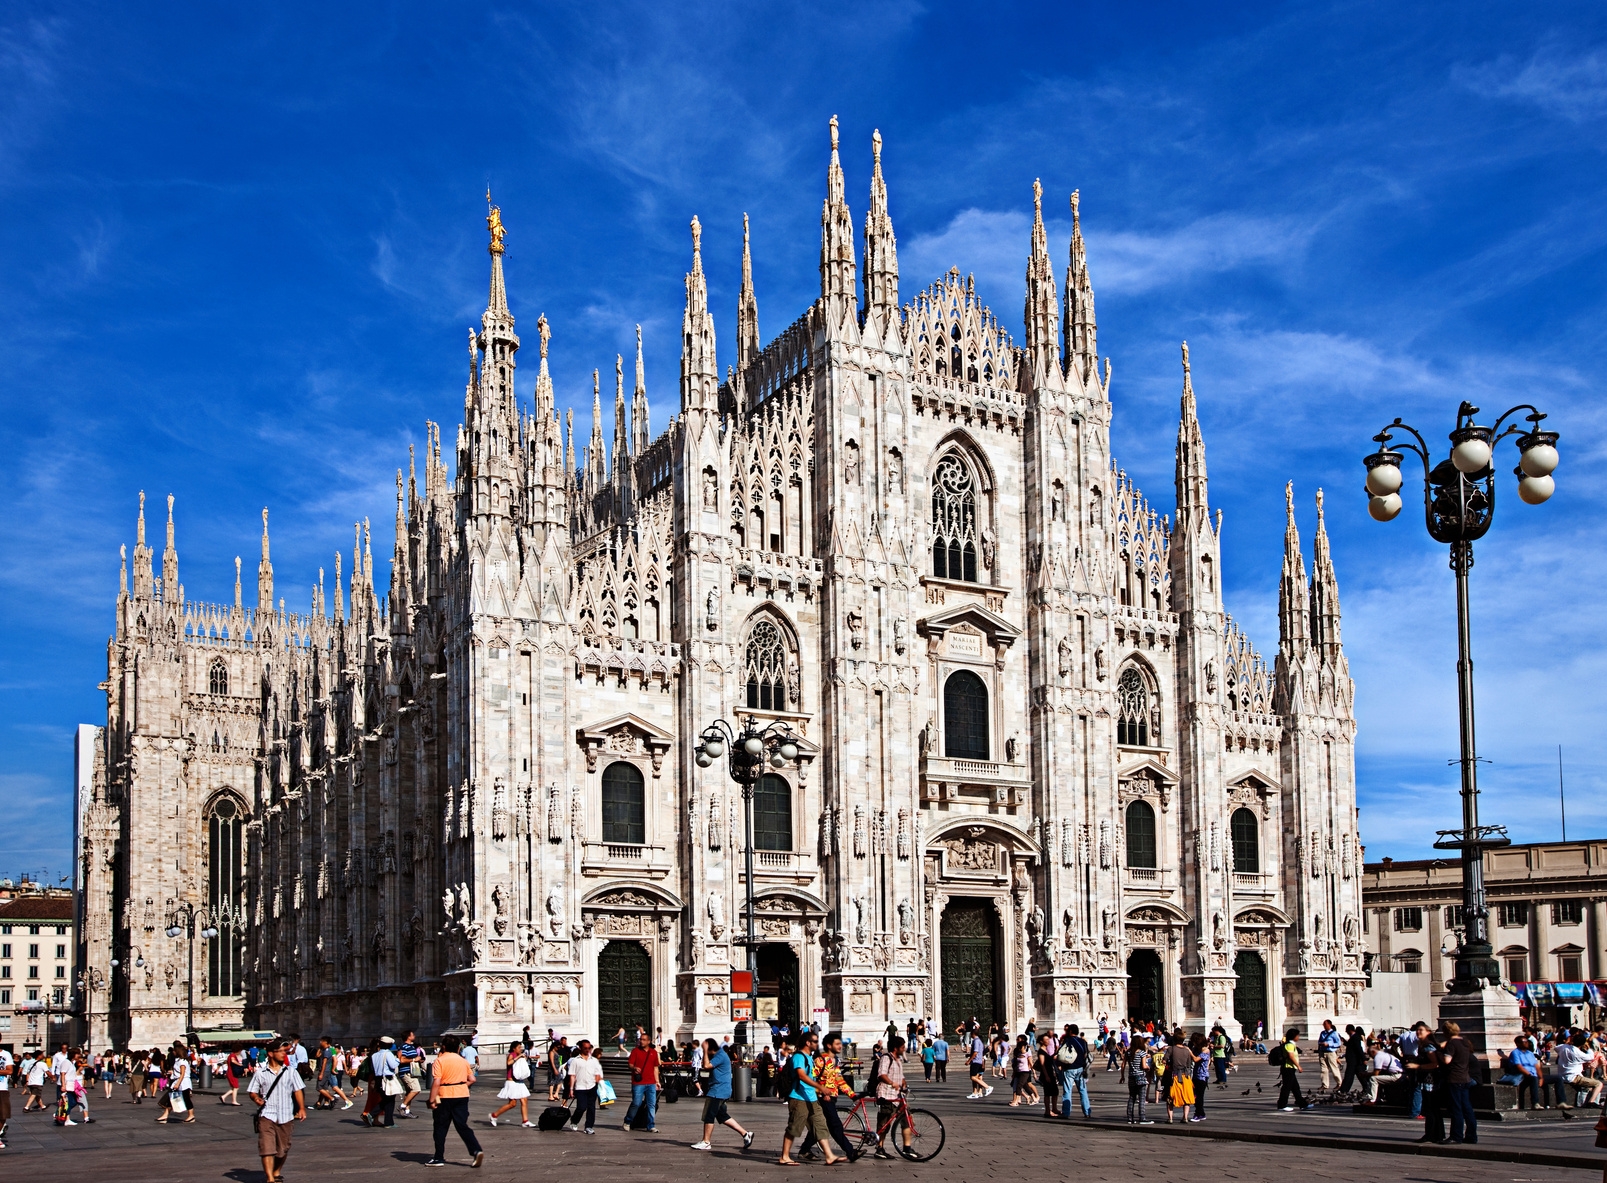 Milan Cathedral / Duomo di Milano, The Most Popular Tourist